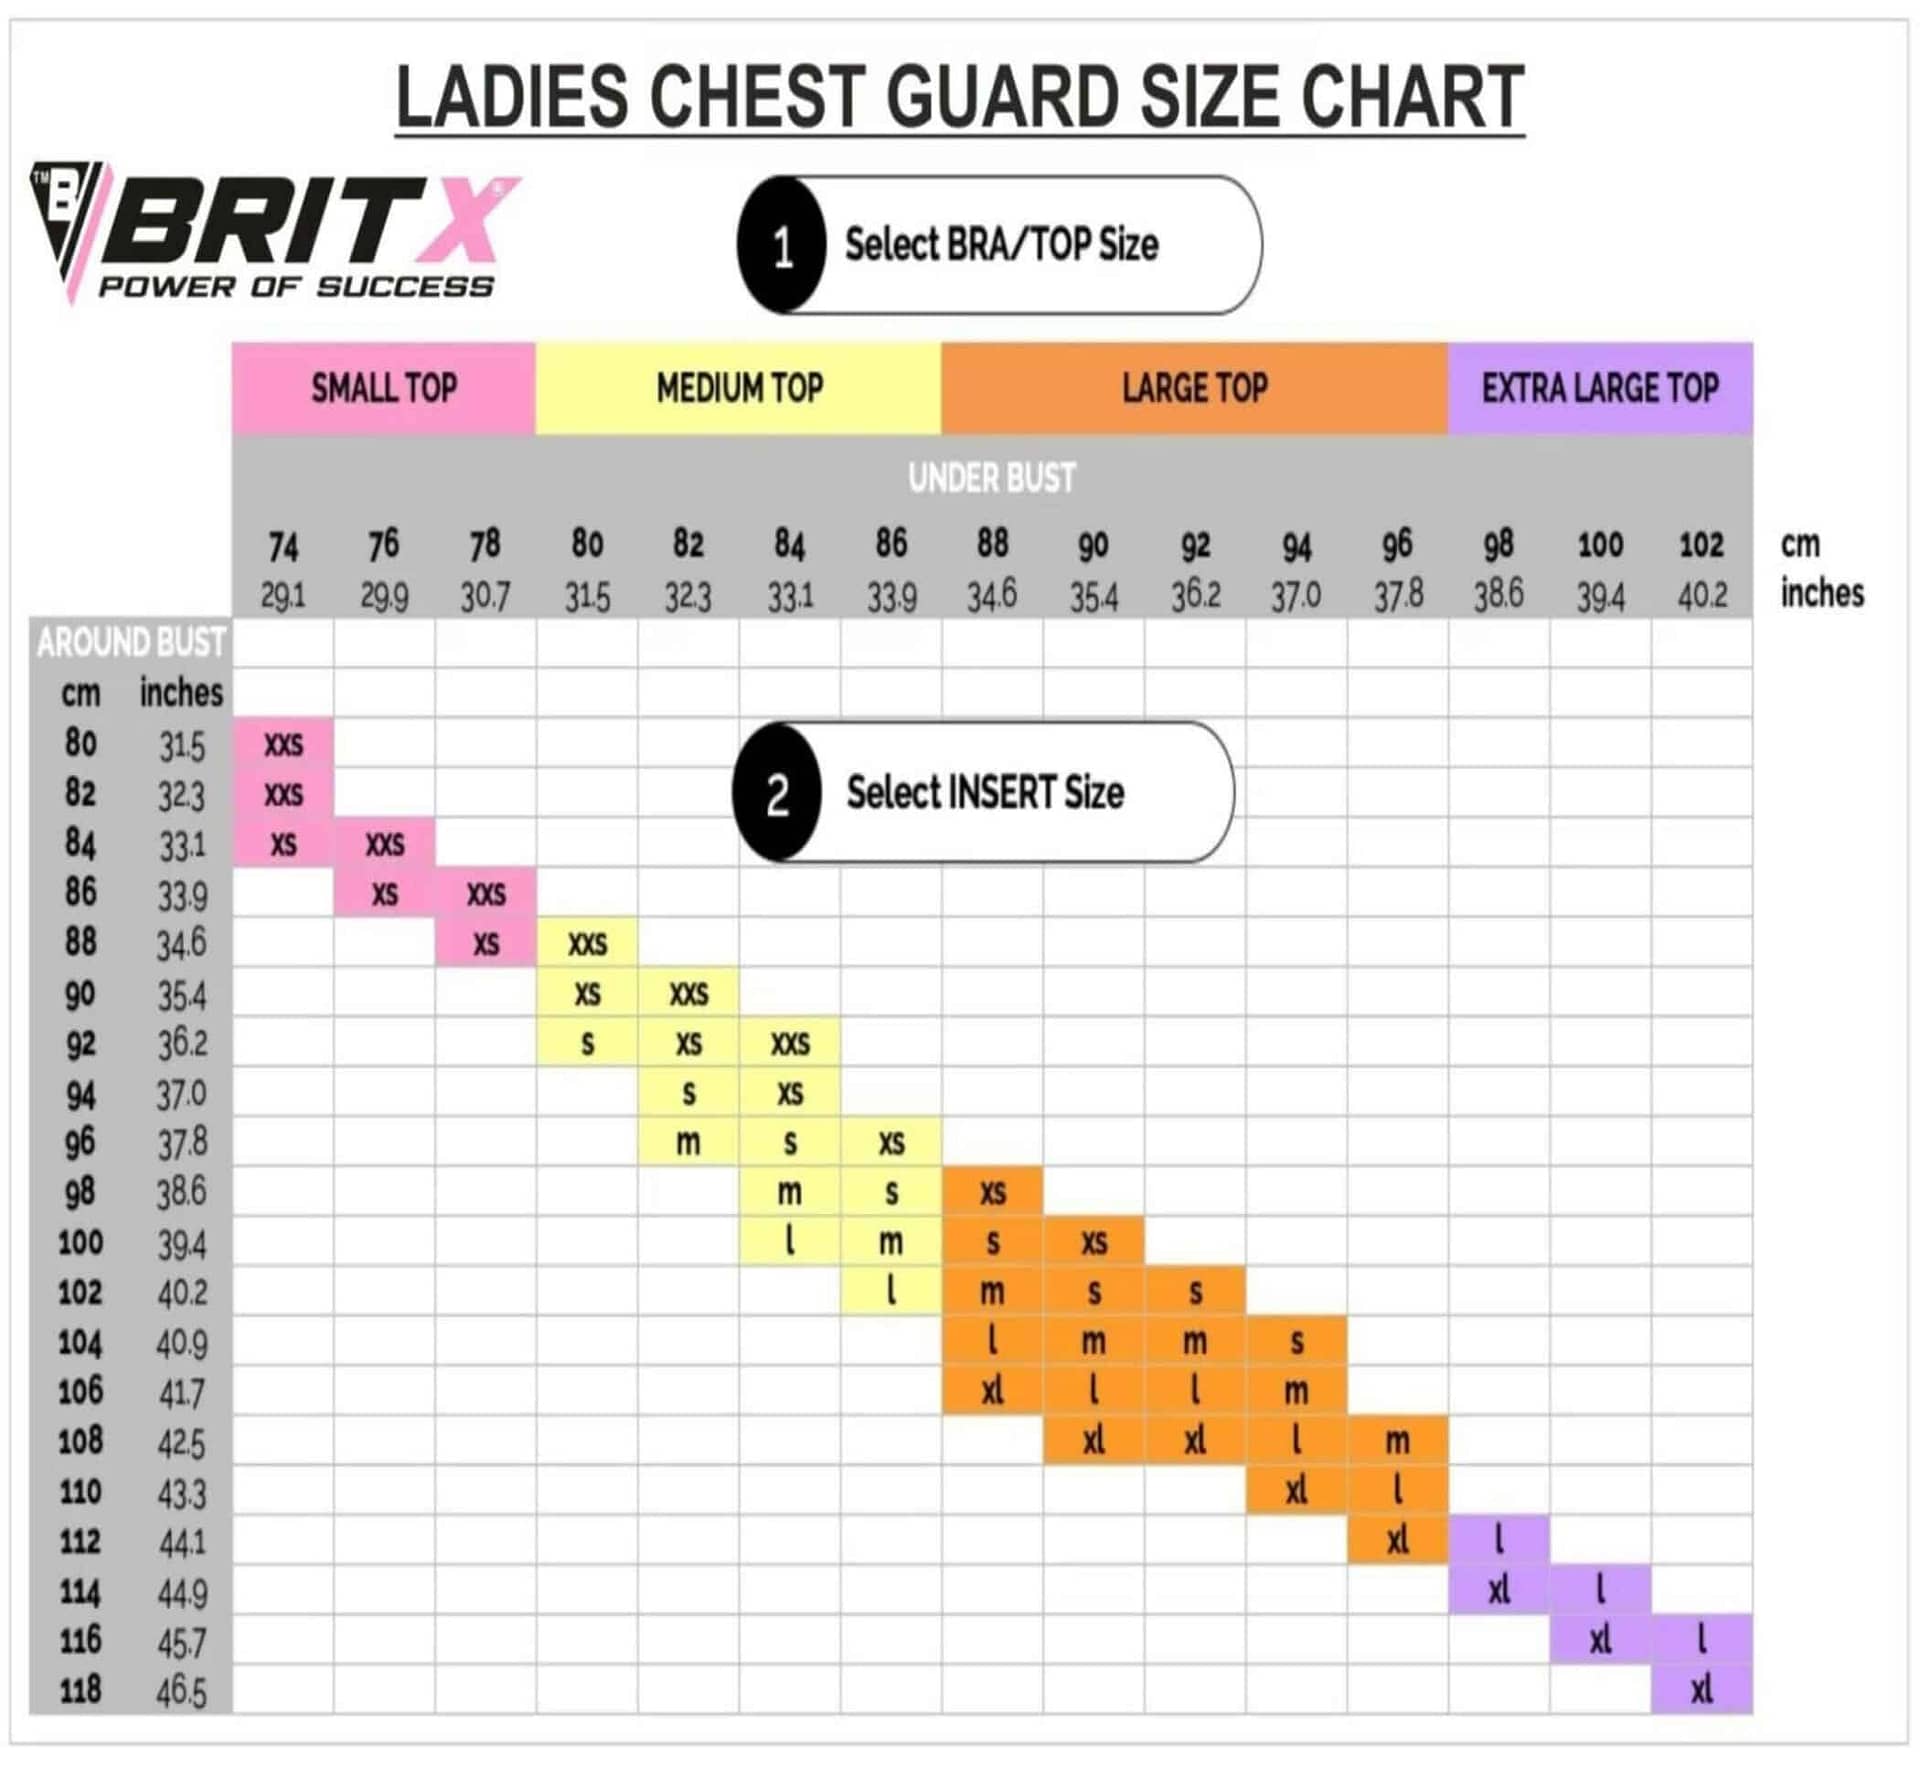 BRITX Ladies Chest Guard Female Chest Guard Protector Sports Bra